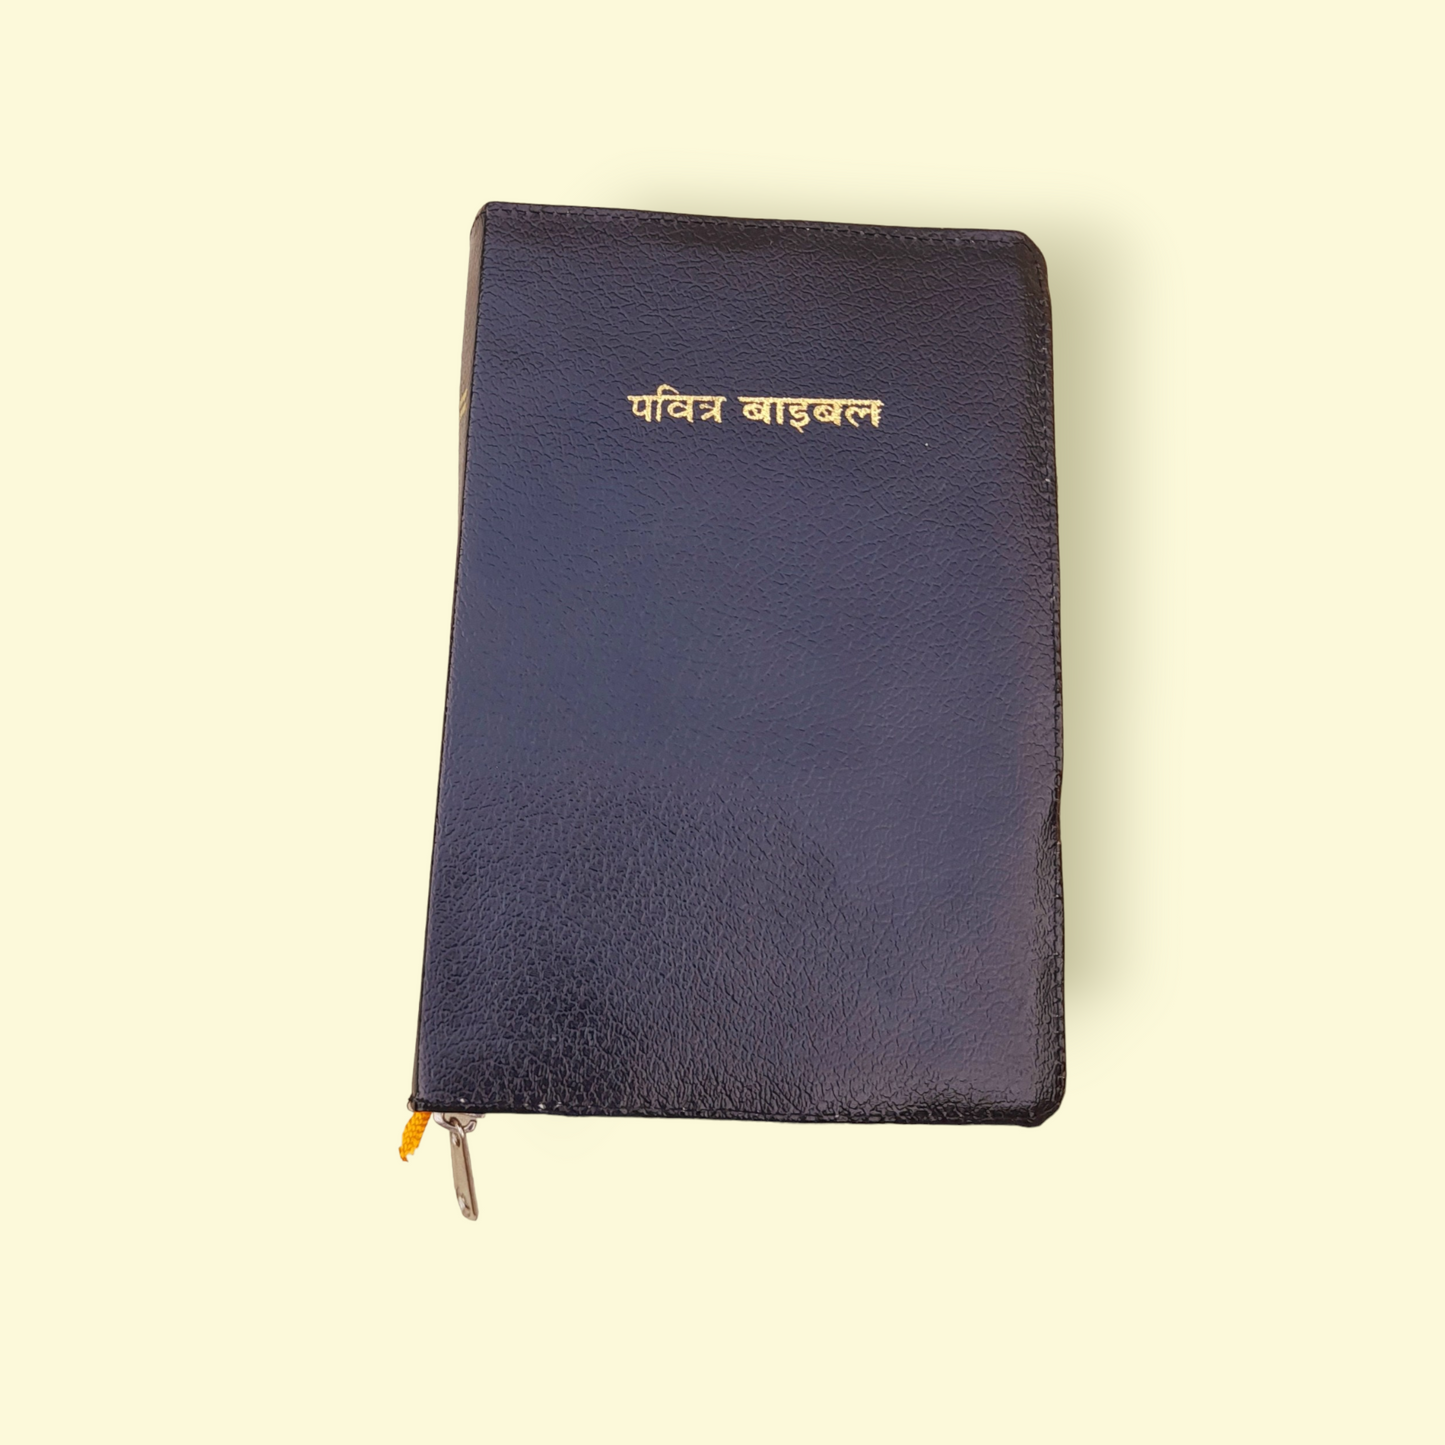 Big Hindi Bible Black Color Bound With Zip